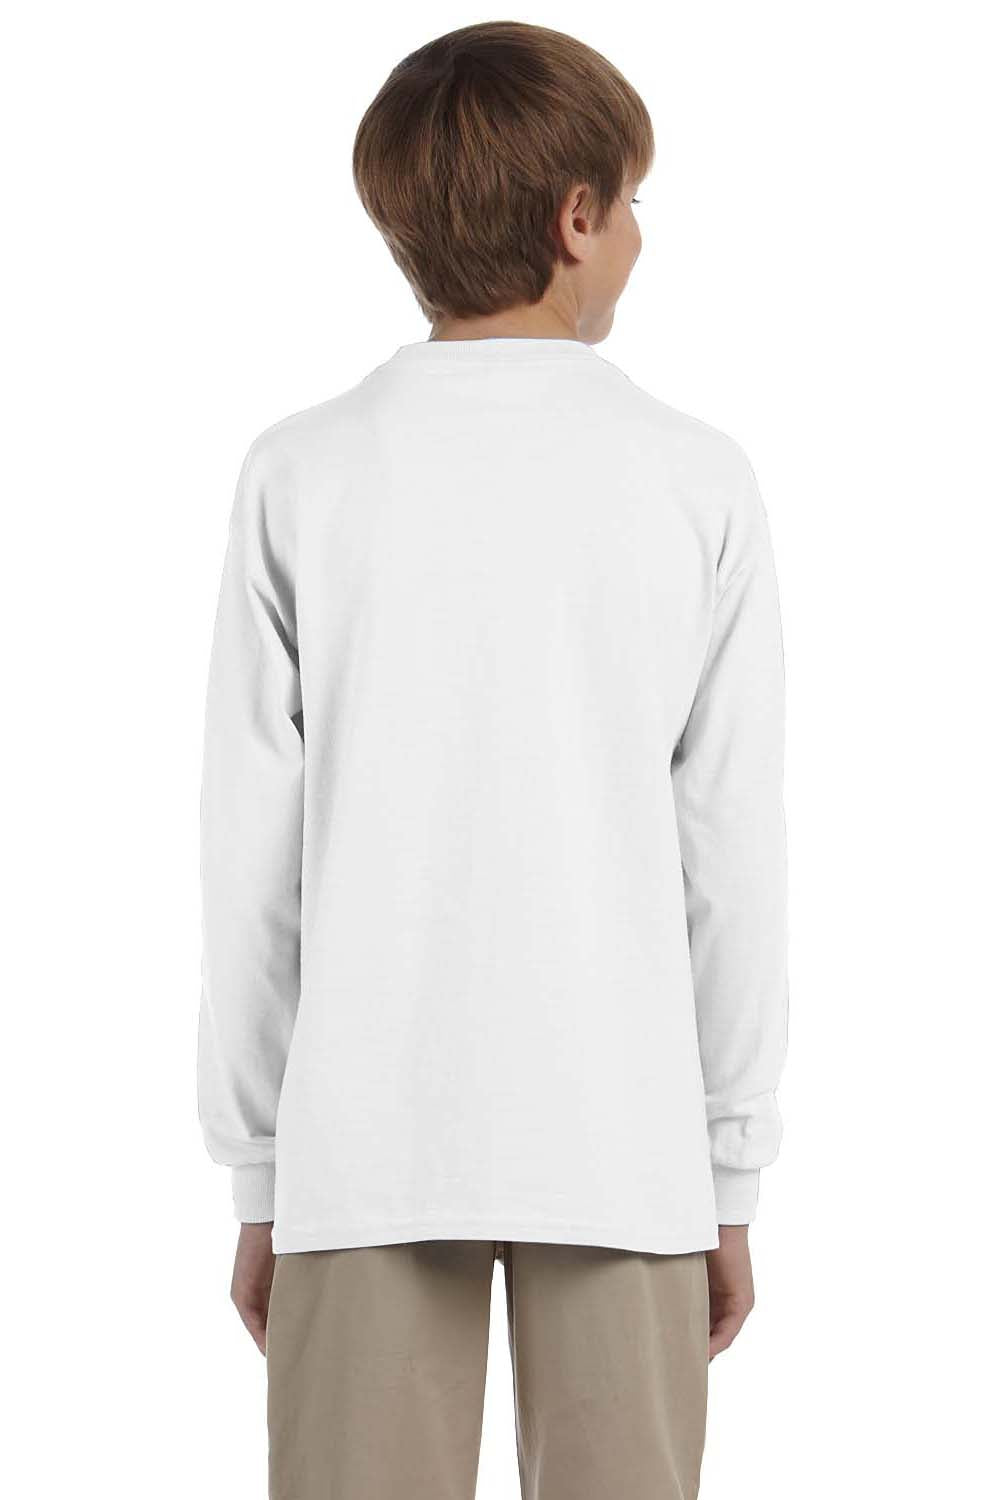 Jerzees 29BL Youth Dri-Power Moisture Wicking Long Sleeve Crewneck T-Shirt White Back